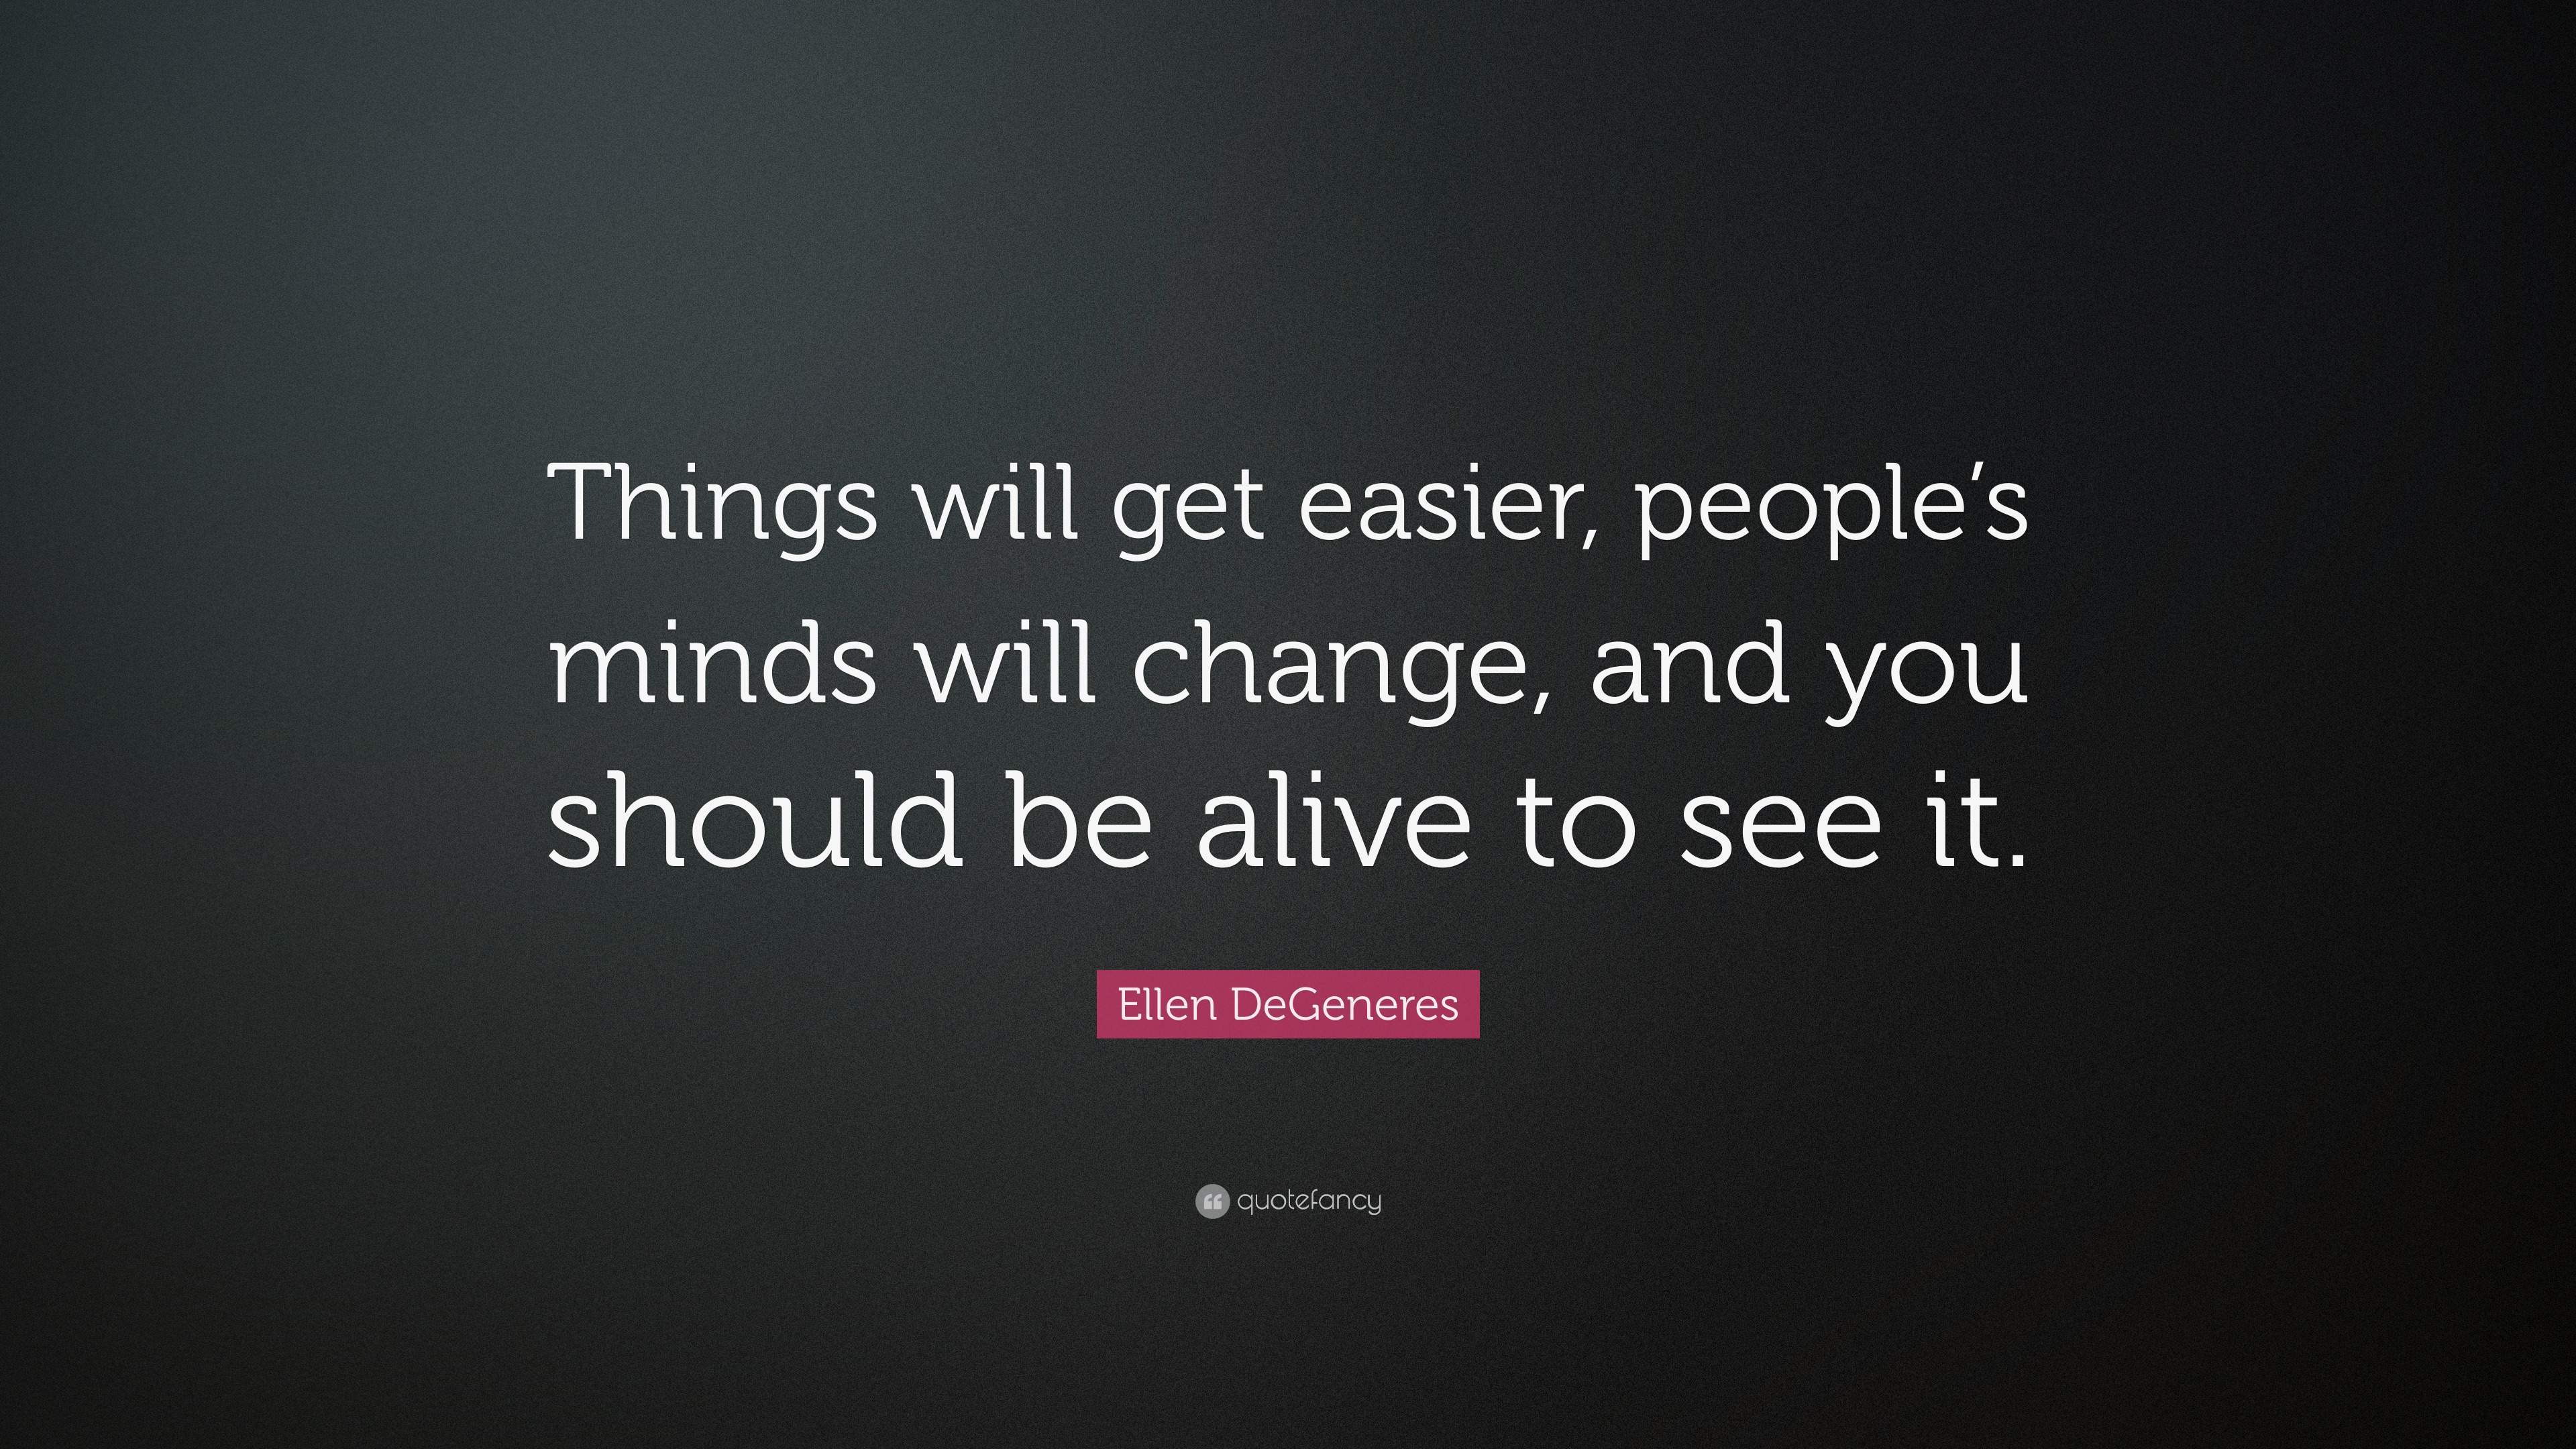 Ellen DeGeneres Quote: “Things will get easier, people’s minds will ...